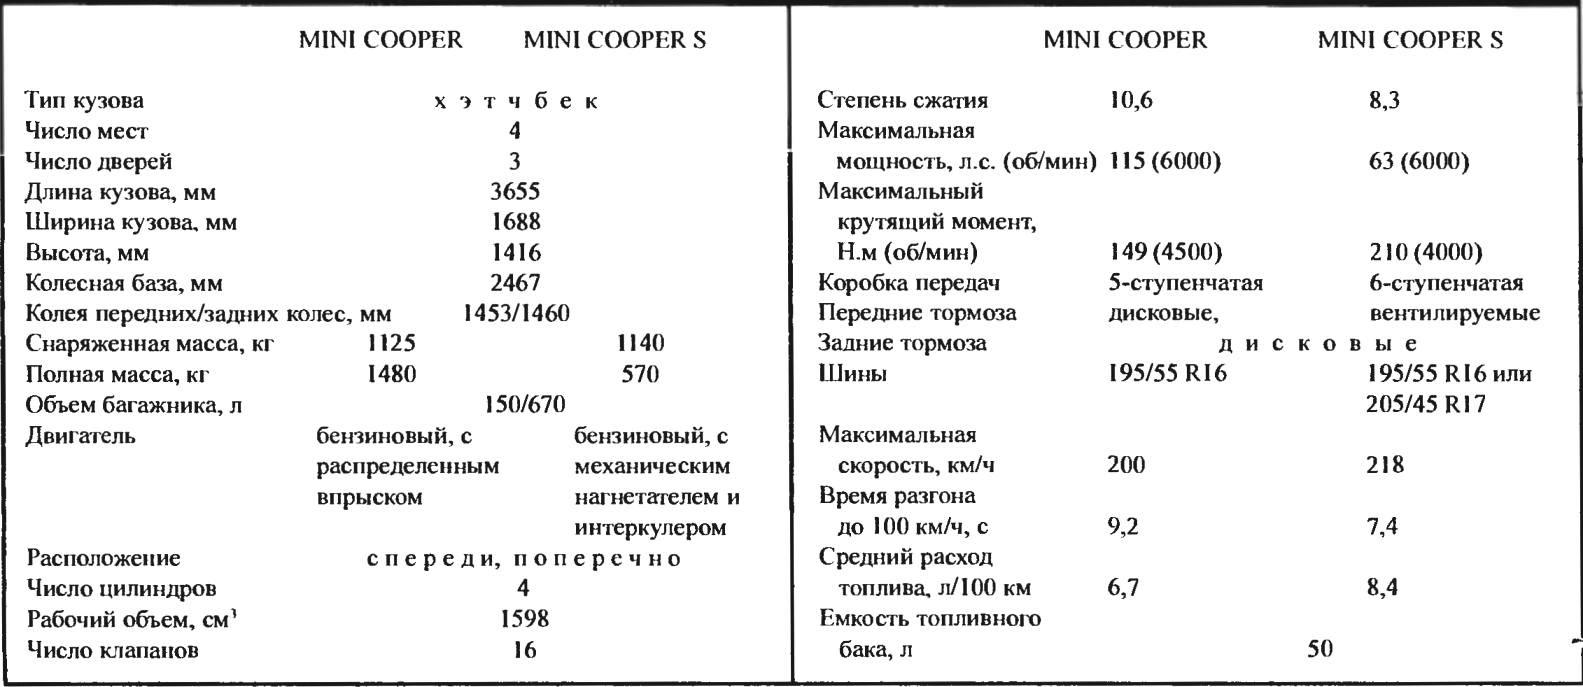 Technical characteristics of the car MINI